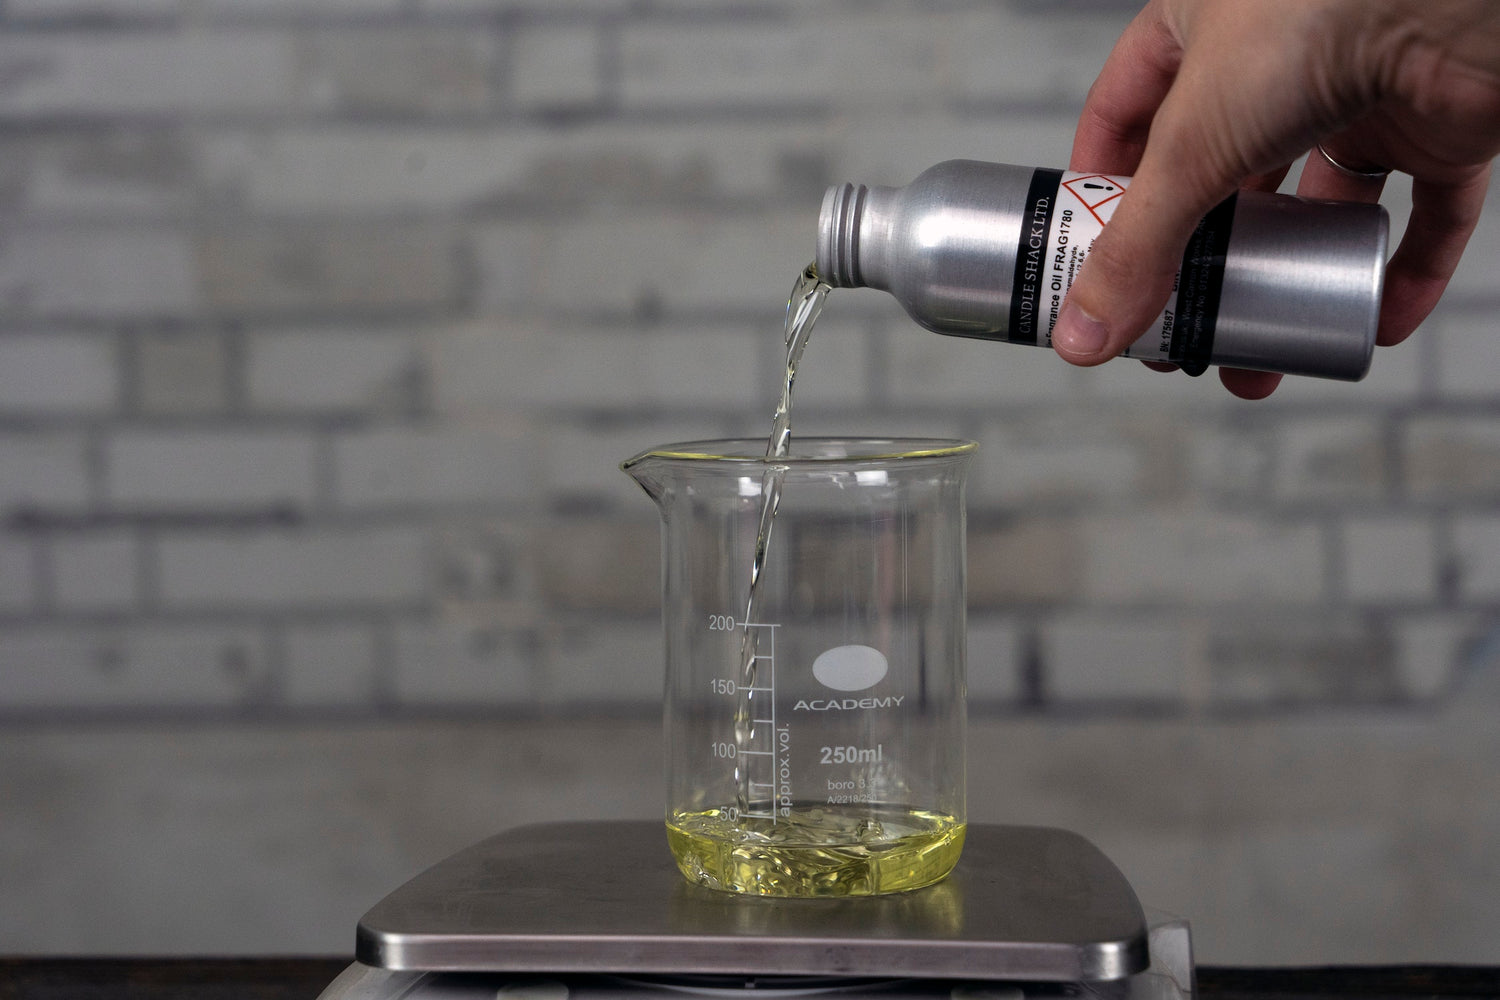 Pouring fragrance oil into a beaker on a set of scales Gieße Duftöl in einen Becher auf einer Waage